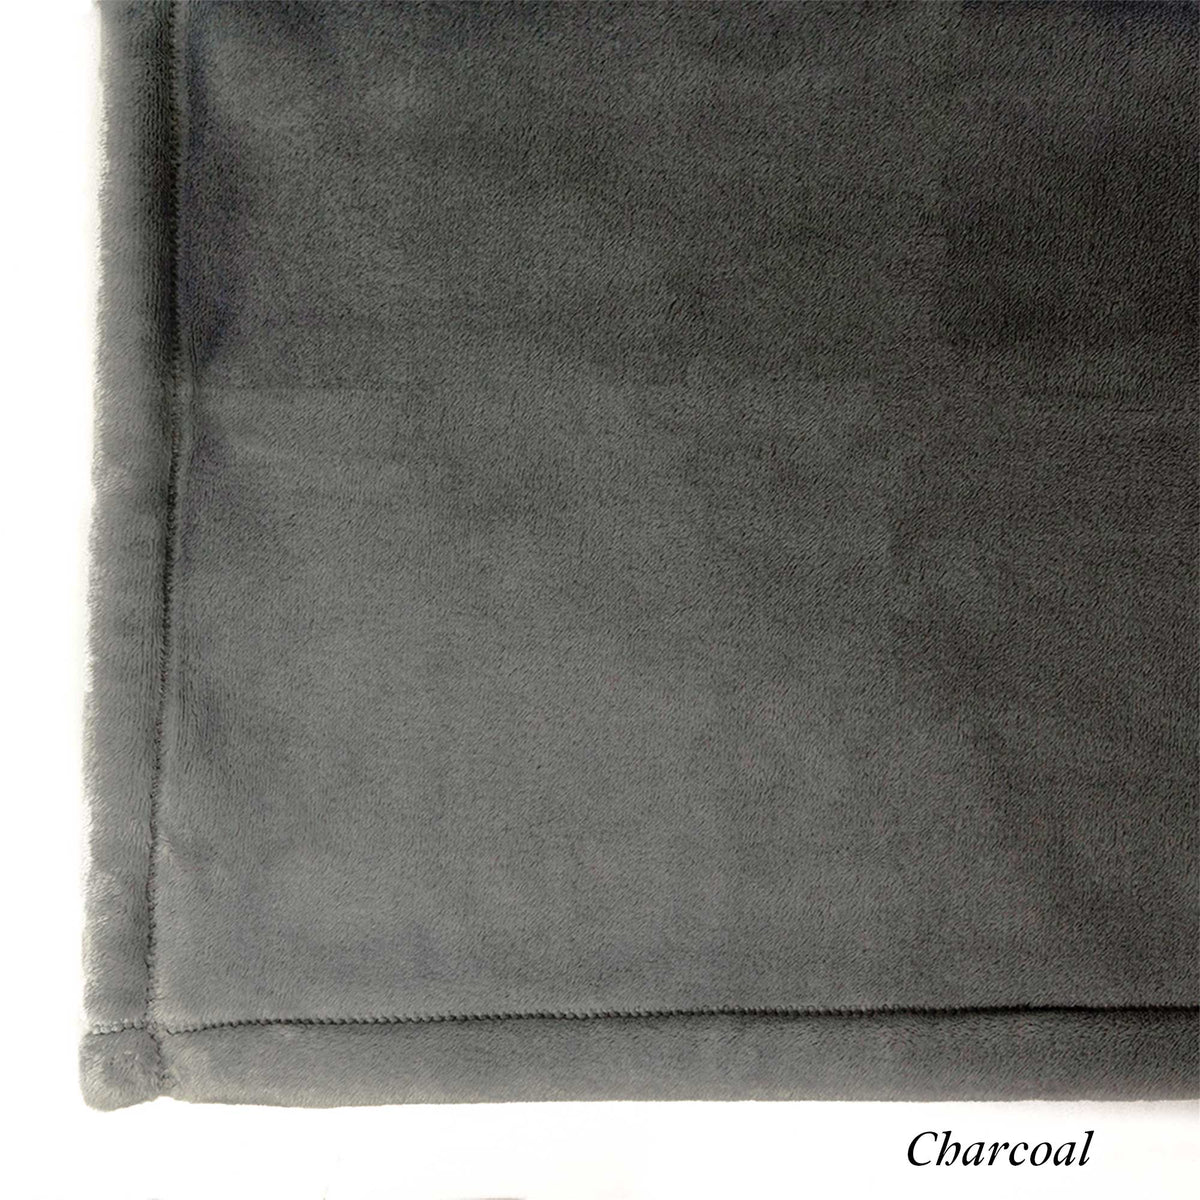 Charcoal - The Best Fleece Blankets - Custom Size Luster Loft Fleece Blankets - American Blanket Company